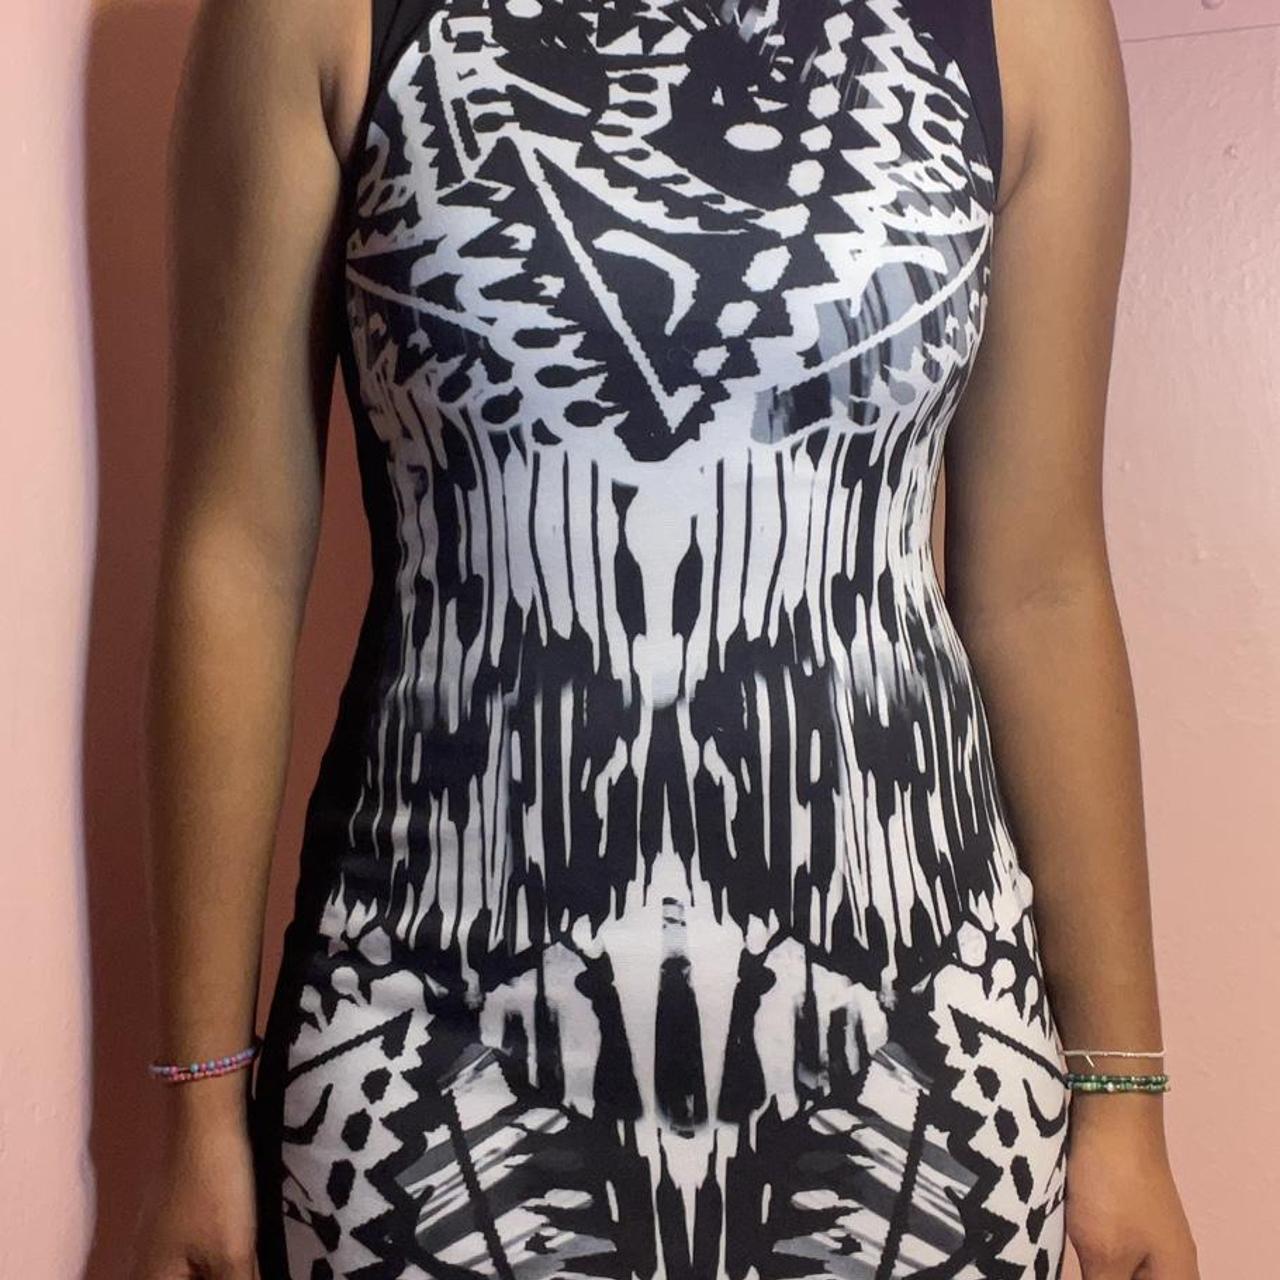 Product Image 3 - zebra skin tight dress 🎬

•